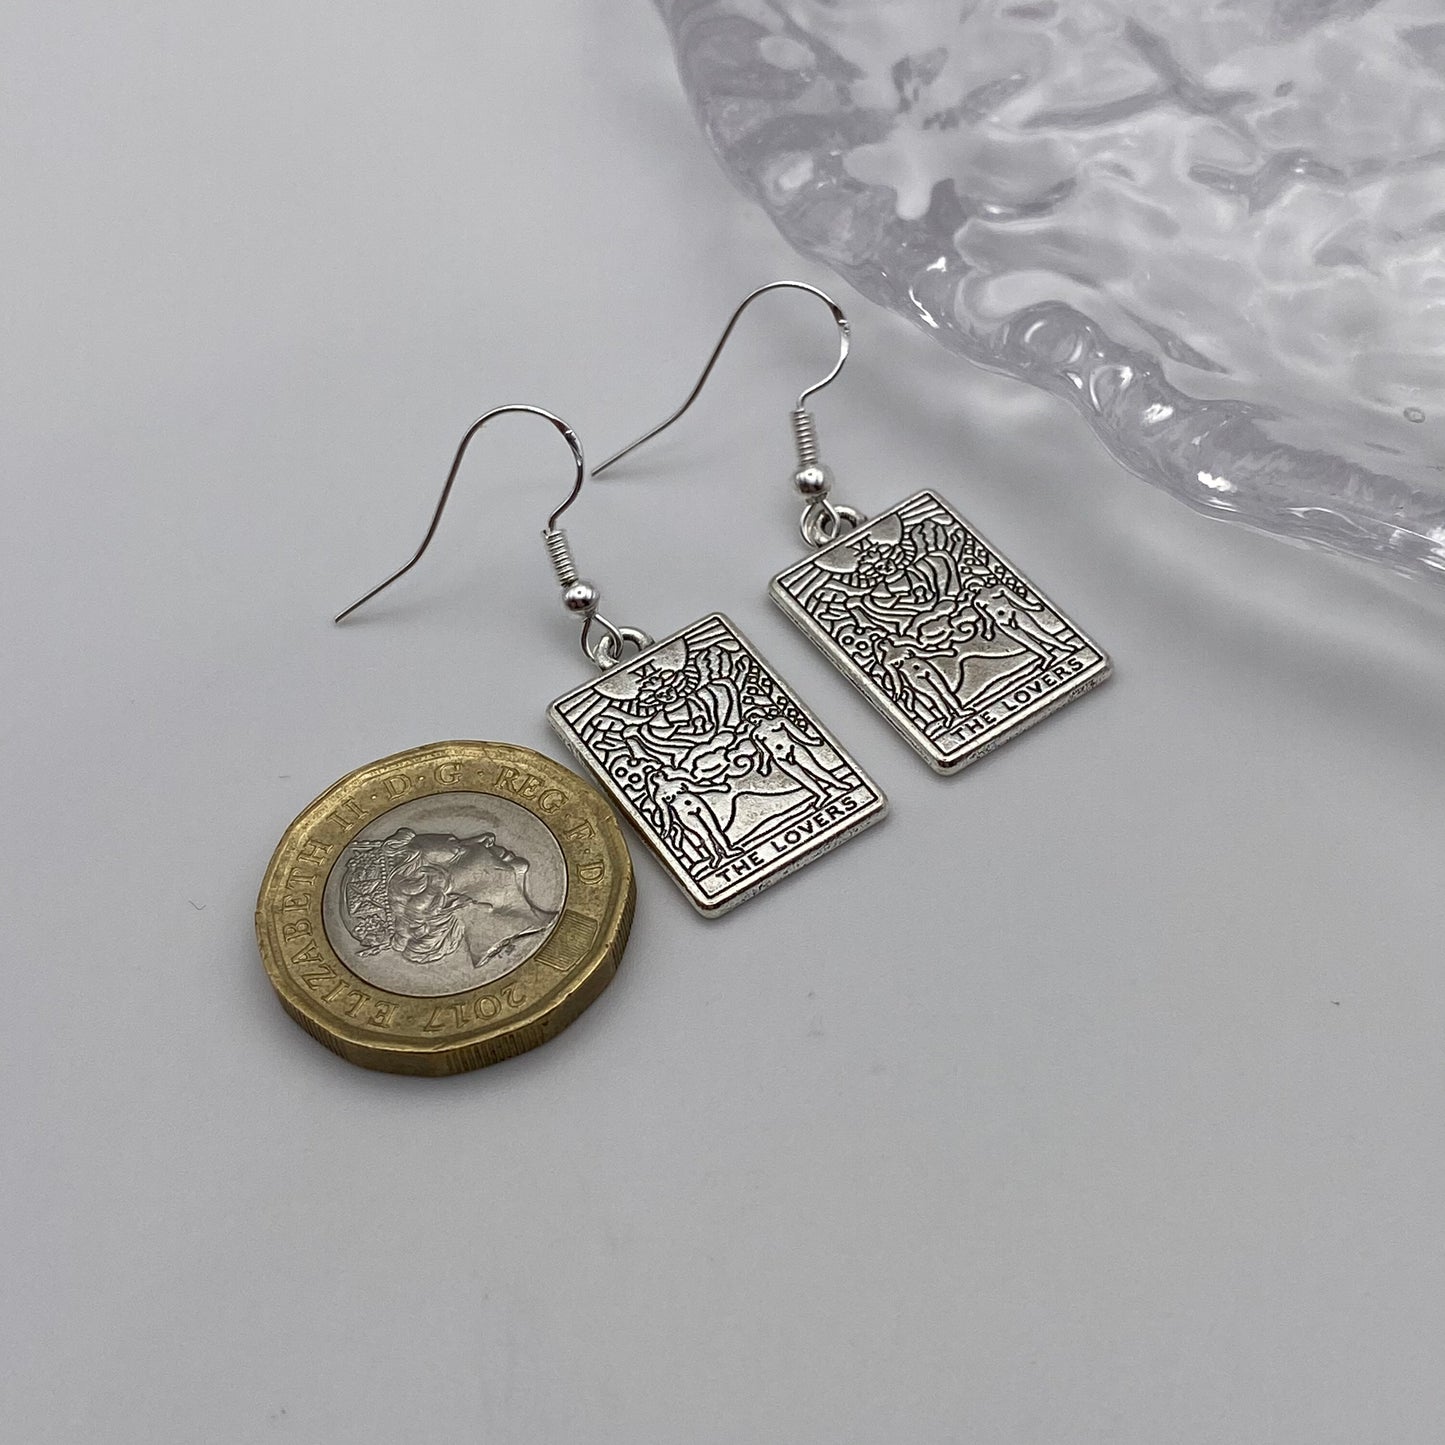 The Lovers Tarot Card Earrings Silver